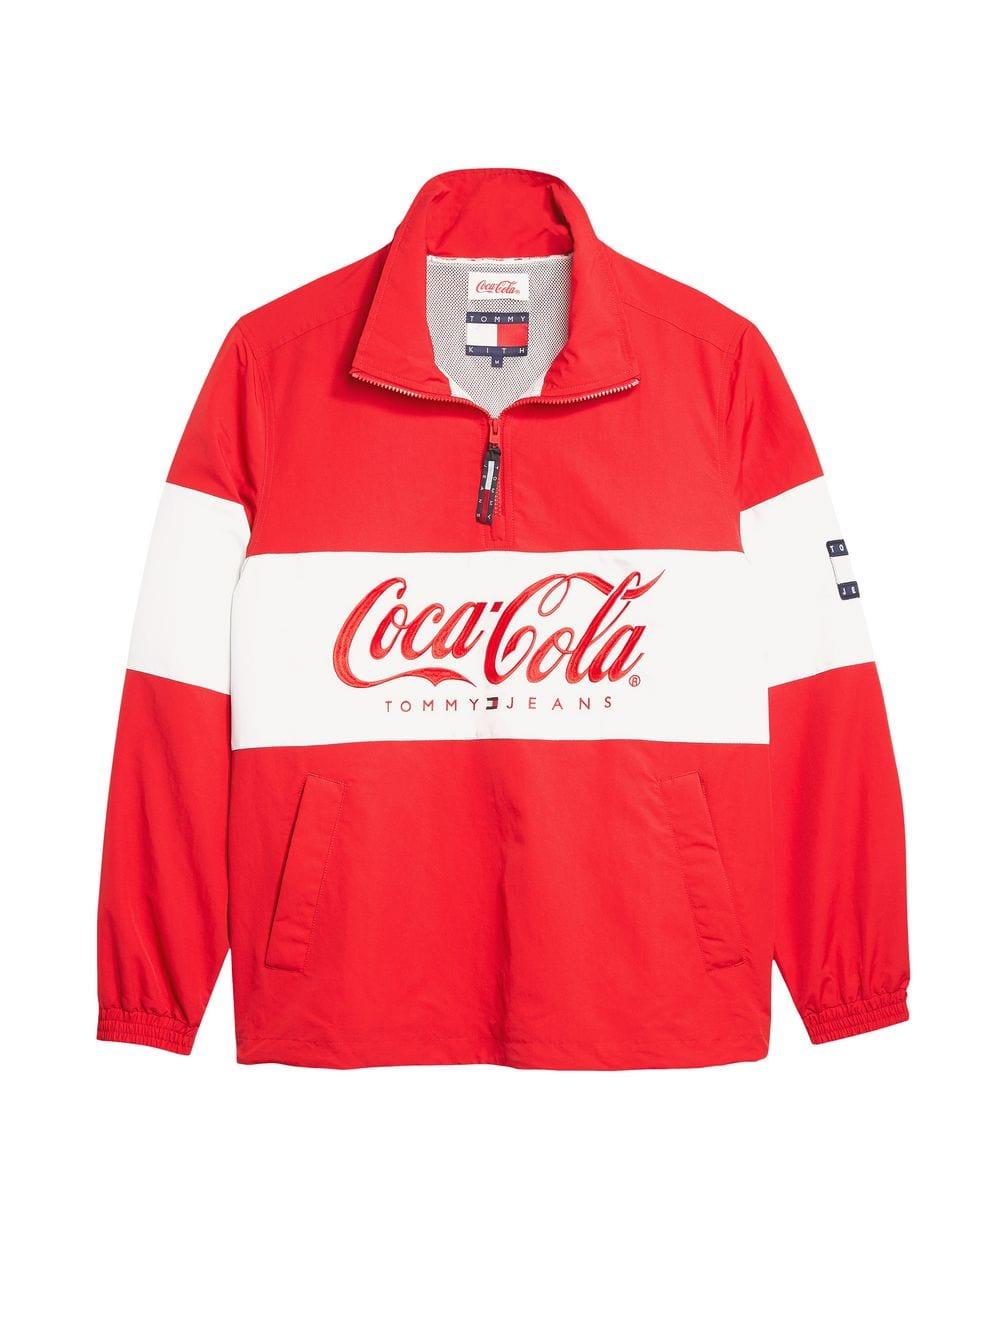 Tommy Hilfiger Denim X Coca-cola Jacket in Red for Men - Lyst